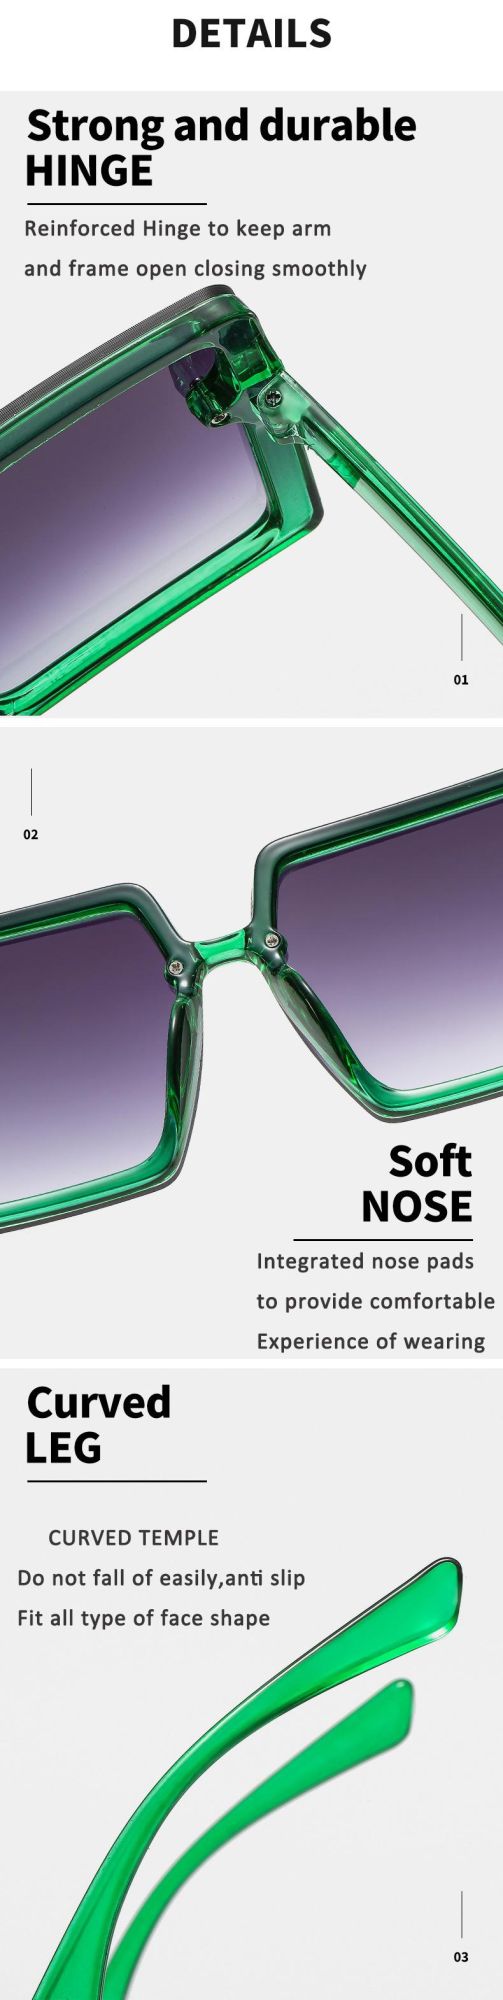 2022 Newest Women Shades Oversized Brand Sun Glasses Fashion UV400 Trendy Square Brand Sunglasses Custom Logo Women Sun Gasses